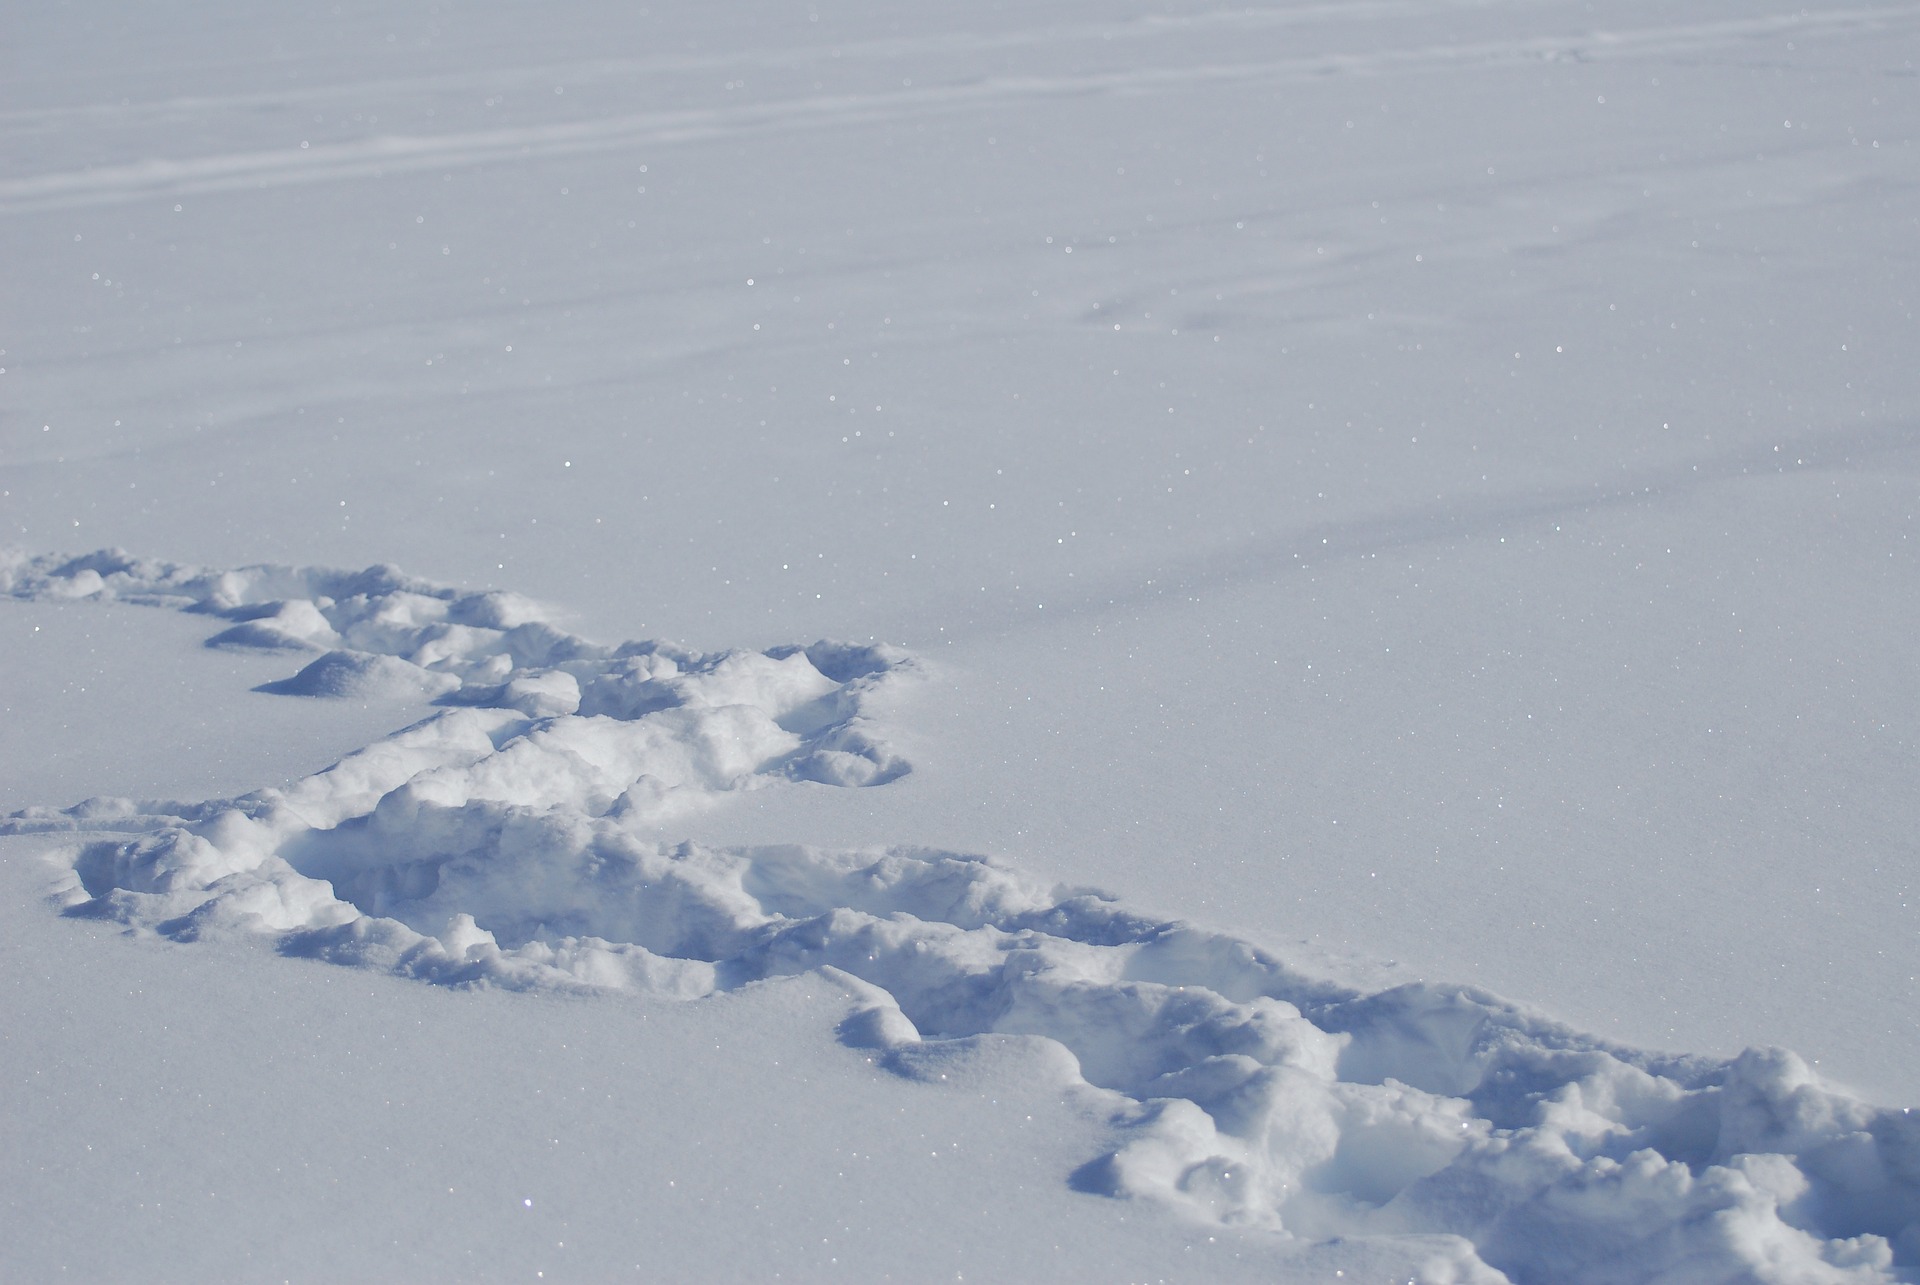 Trail of footprints in deep snow.